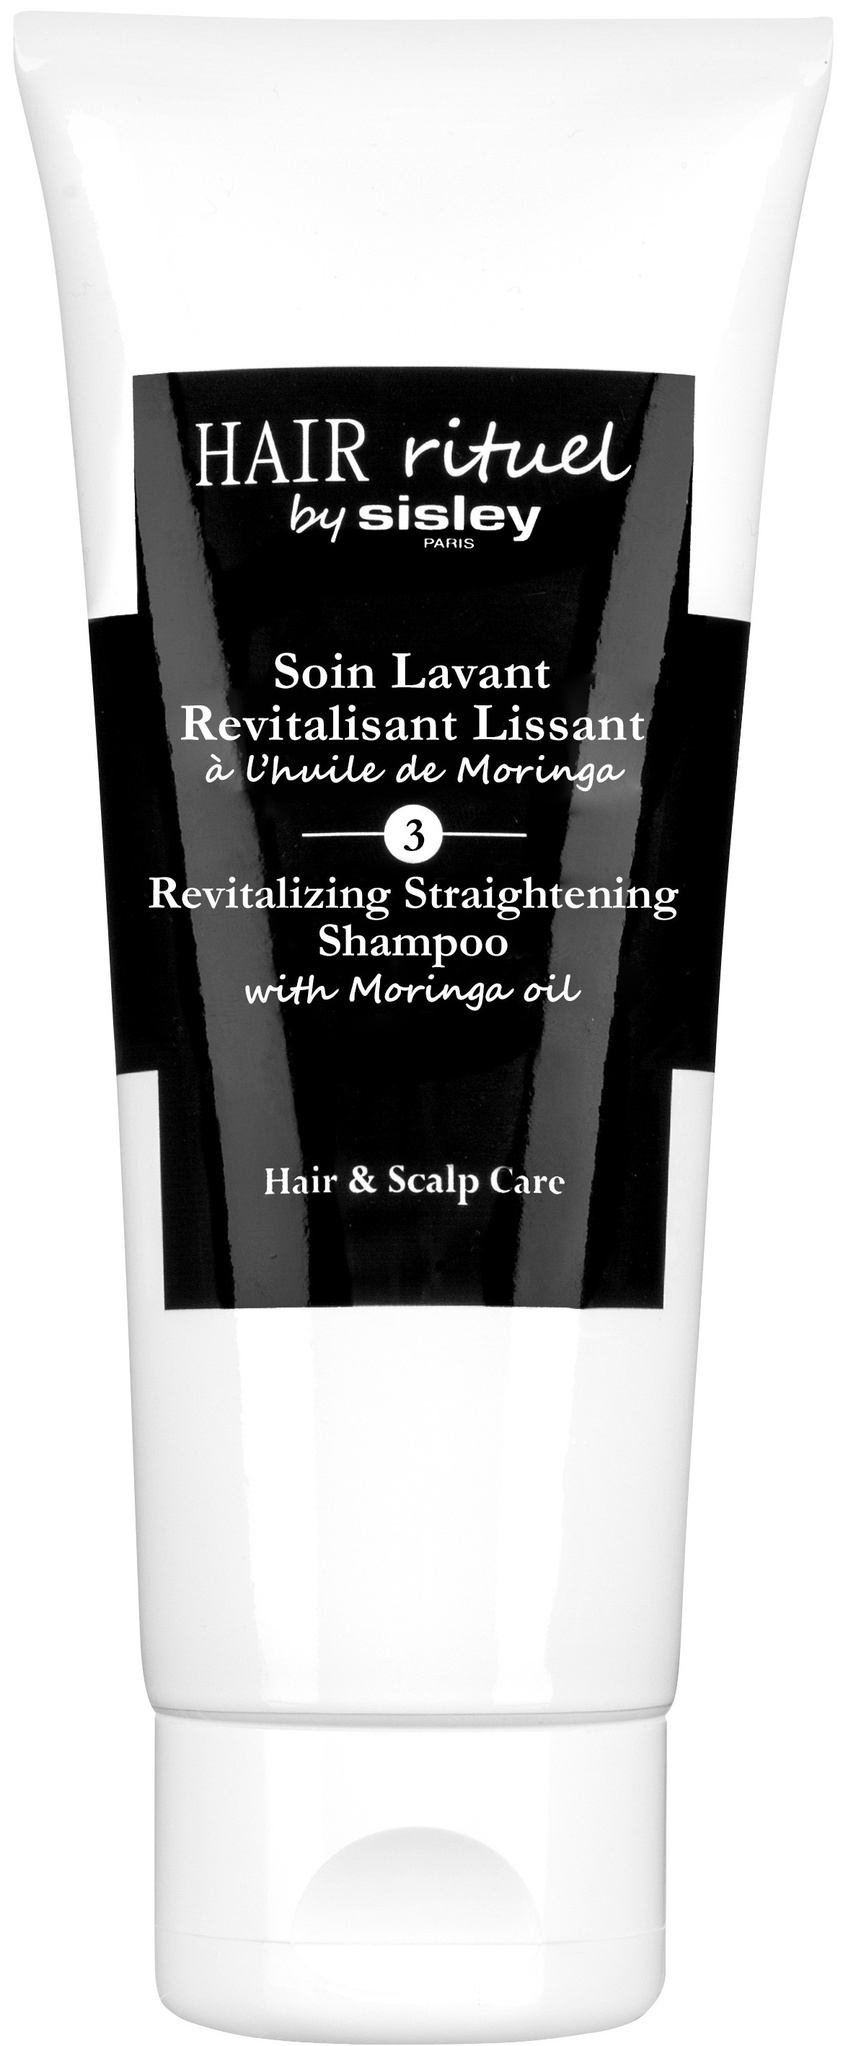 Sisley Hair Rituel Revitalizing Straightening Shampoo